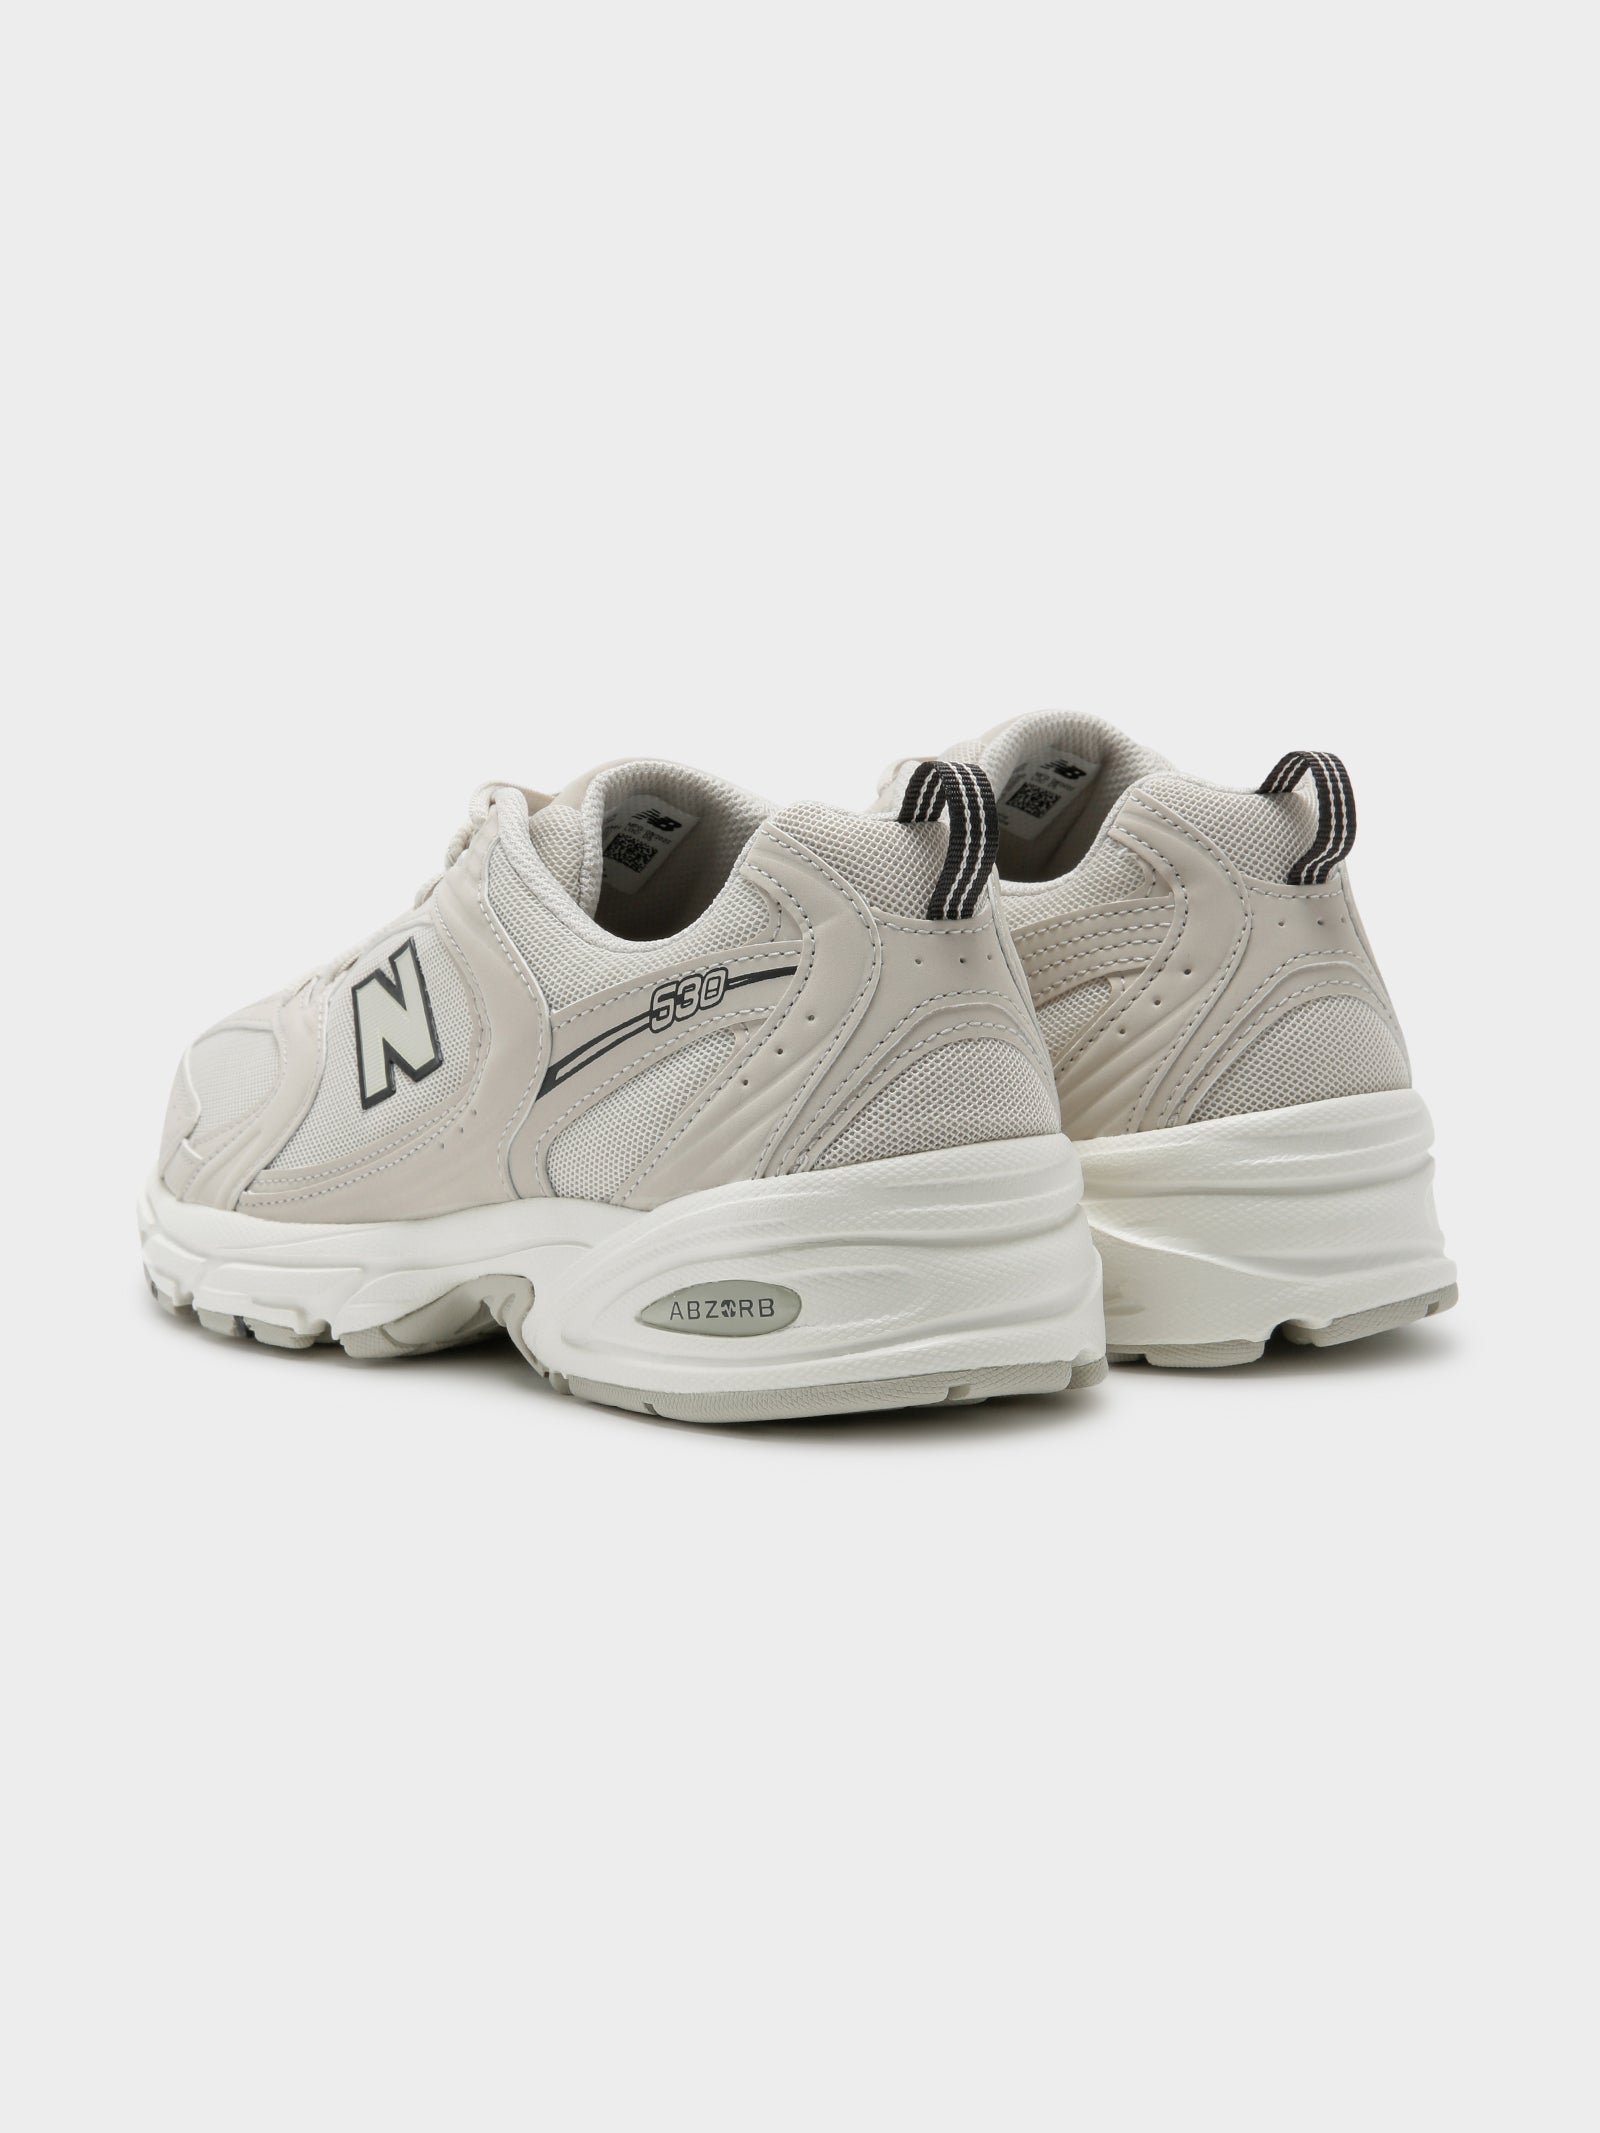 Unisex 530 Sneakers in Grey & White